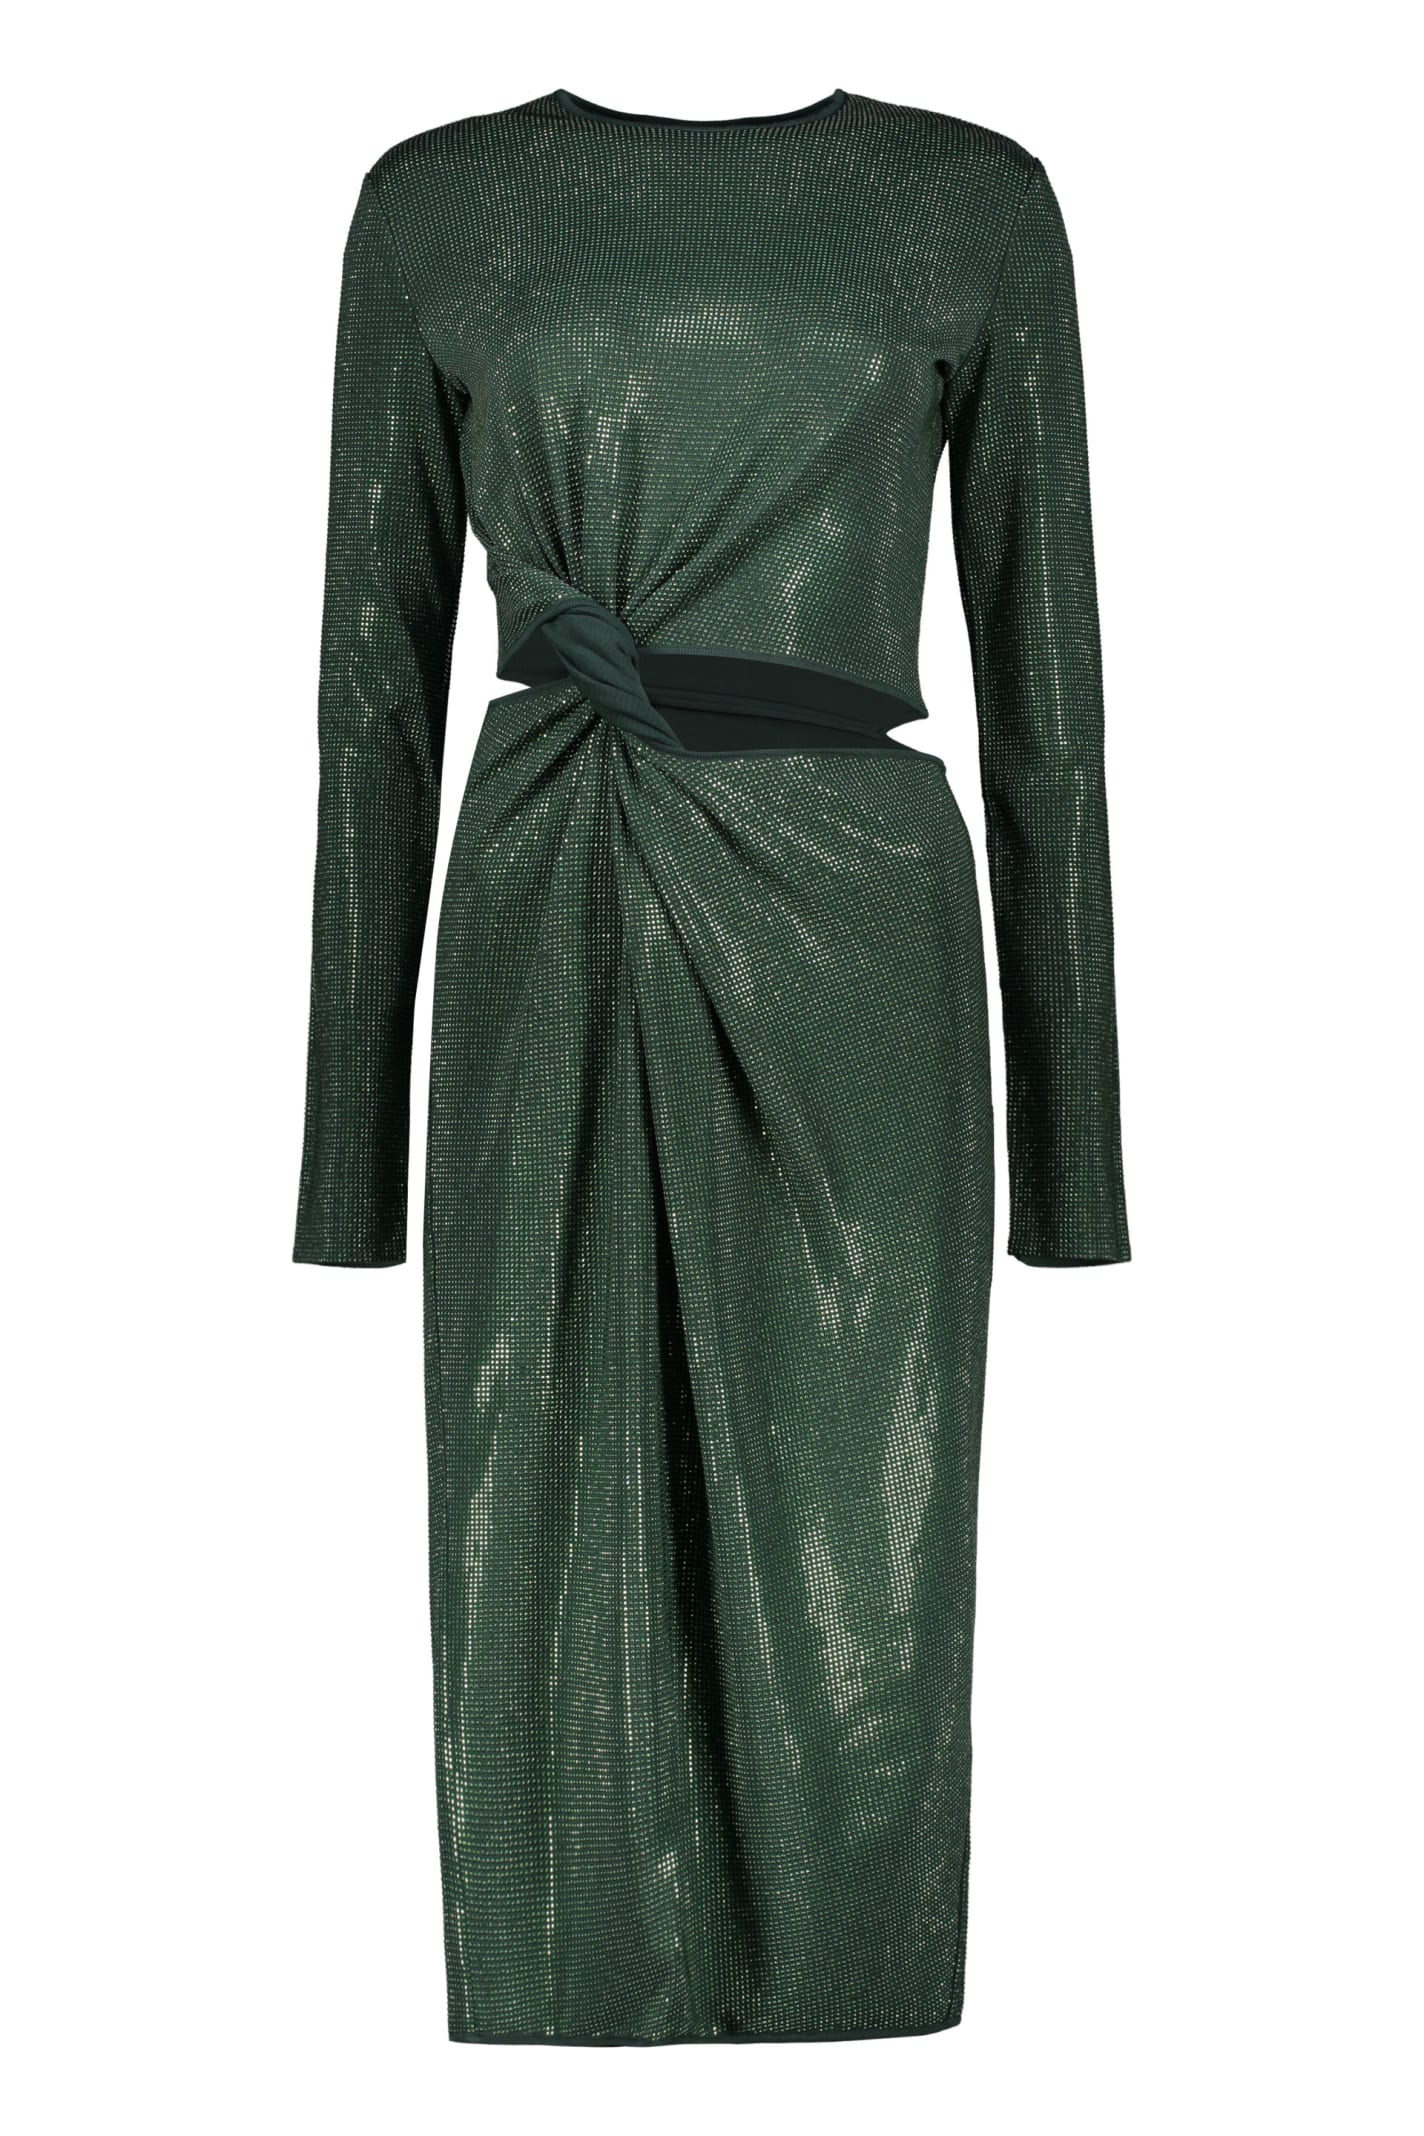 Bottega Veneta Rhinestone Dress In Green